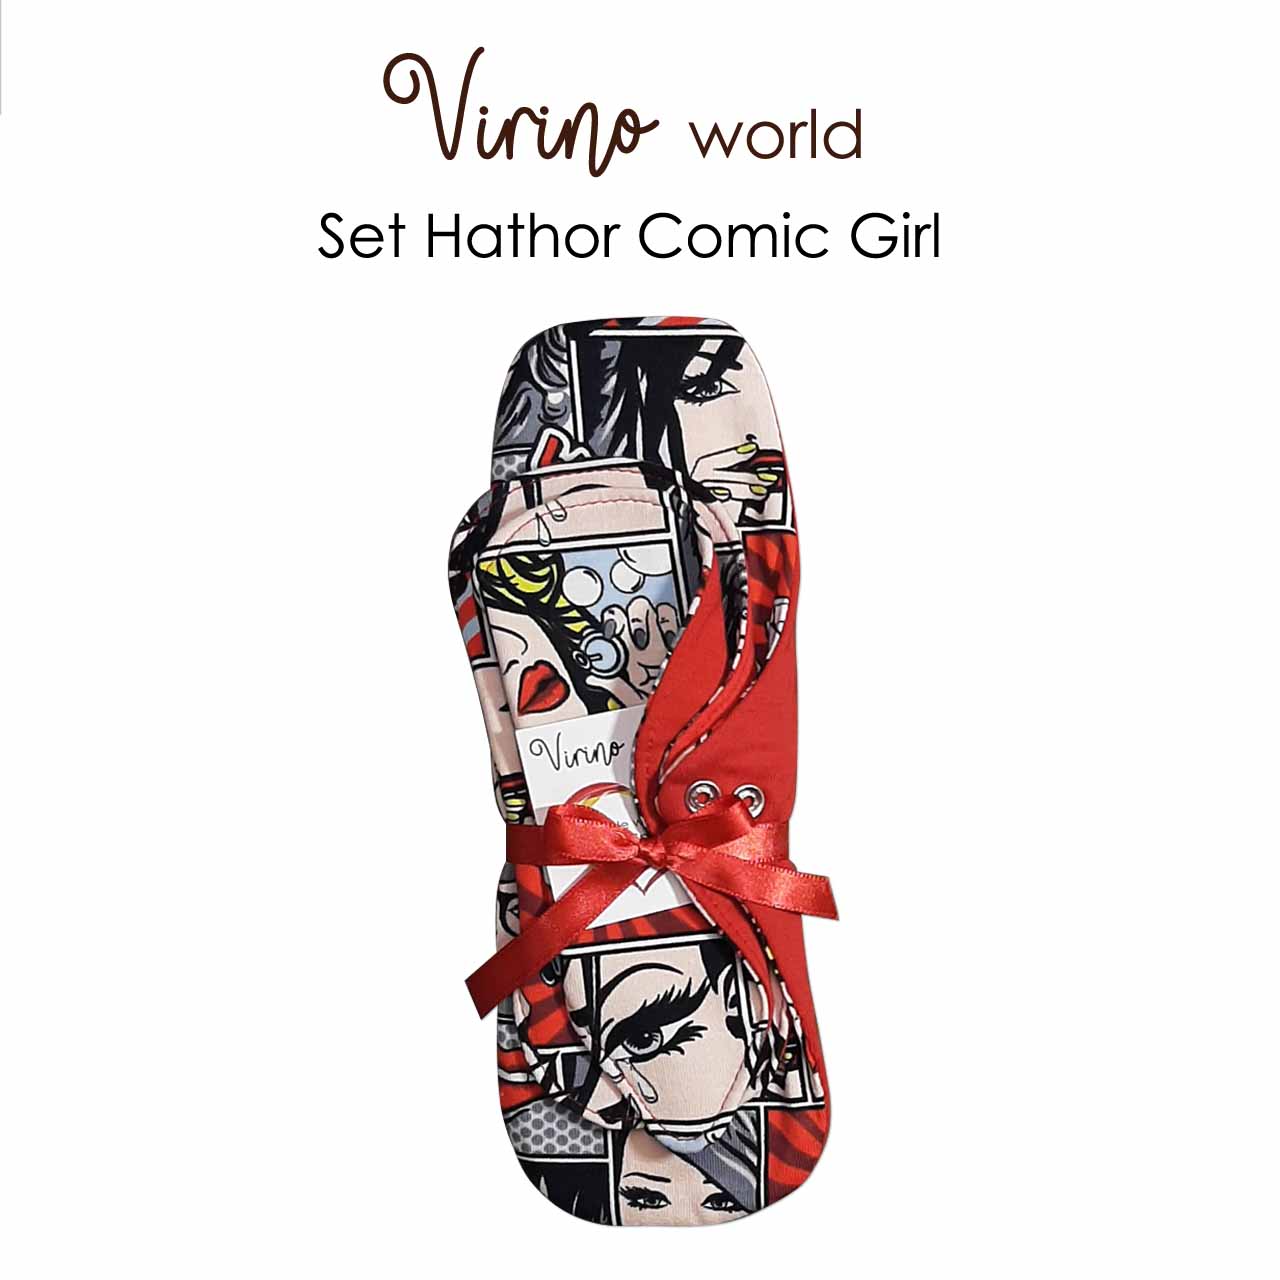 Set Compresa Hathor Virino world Comic Girl